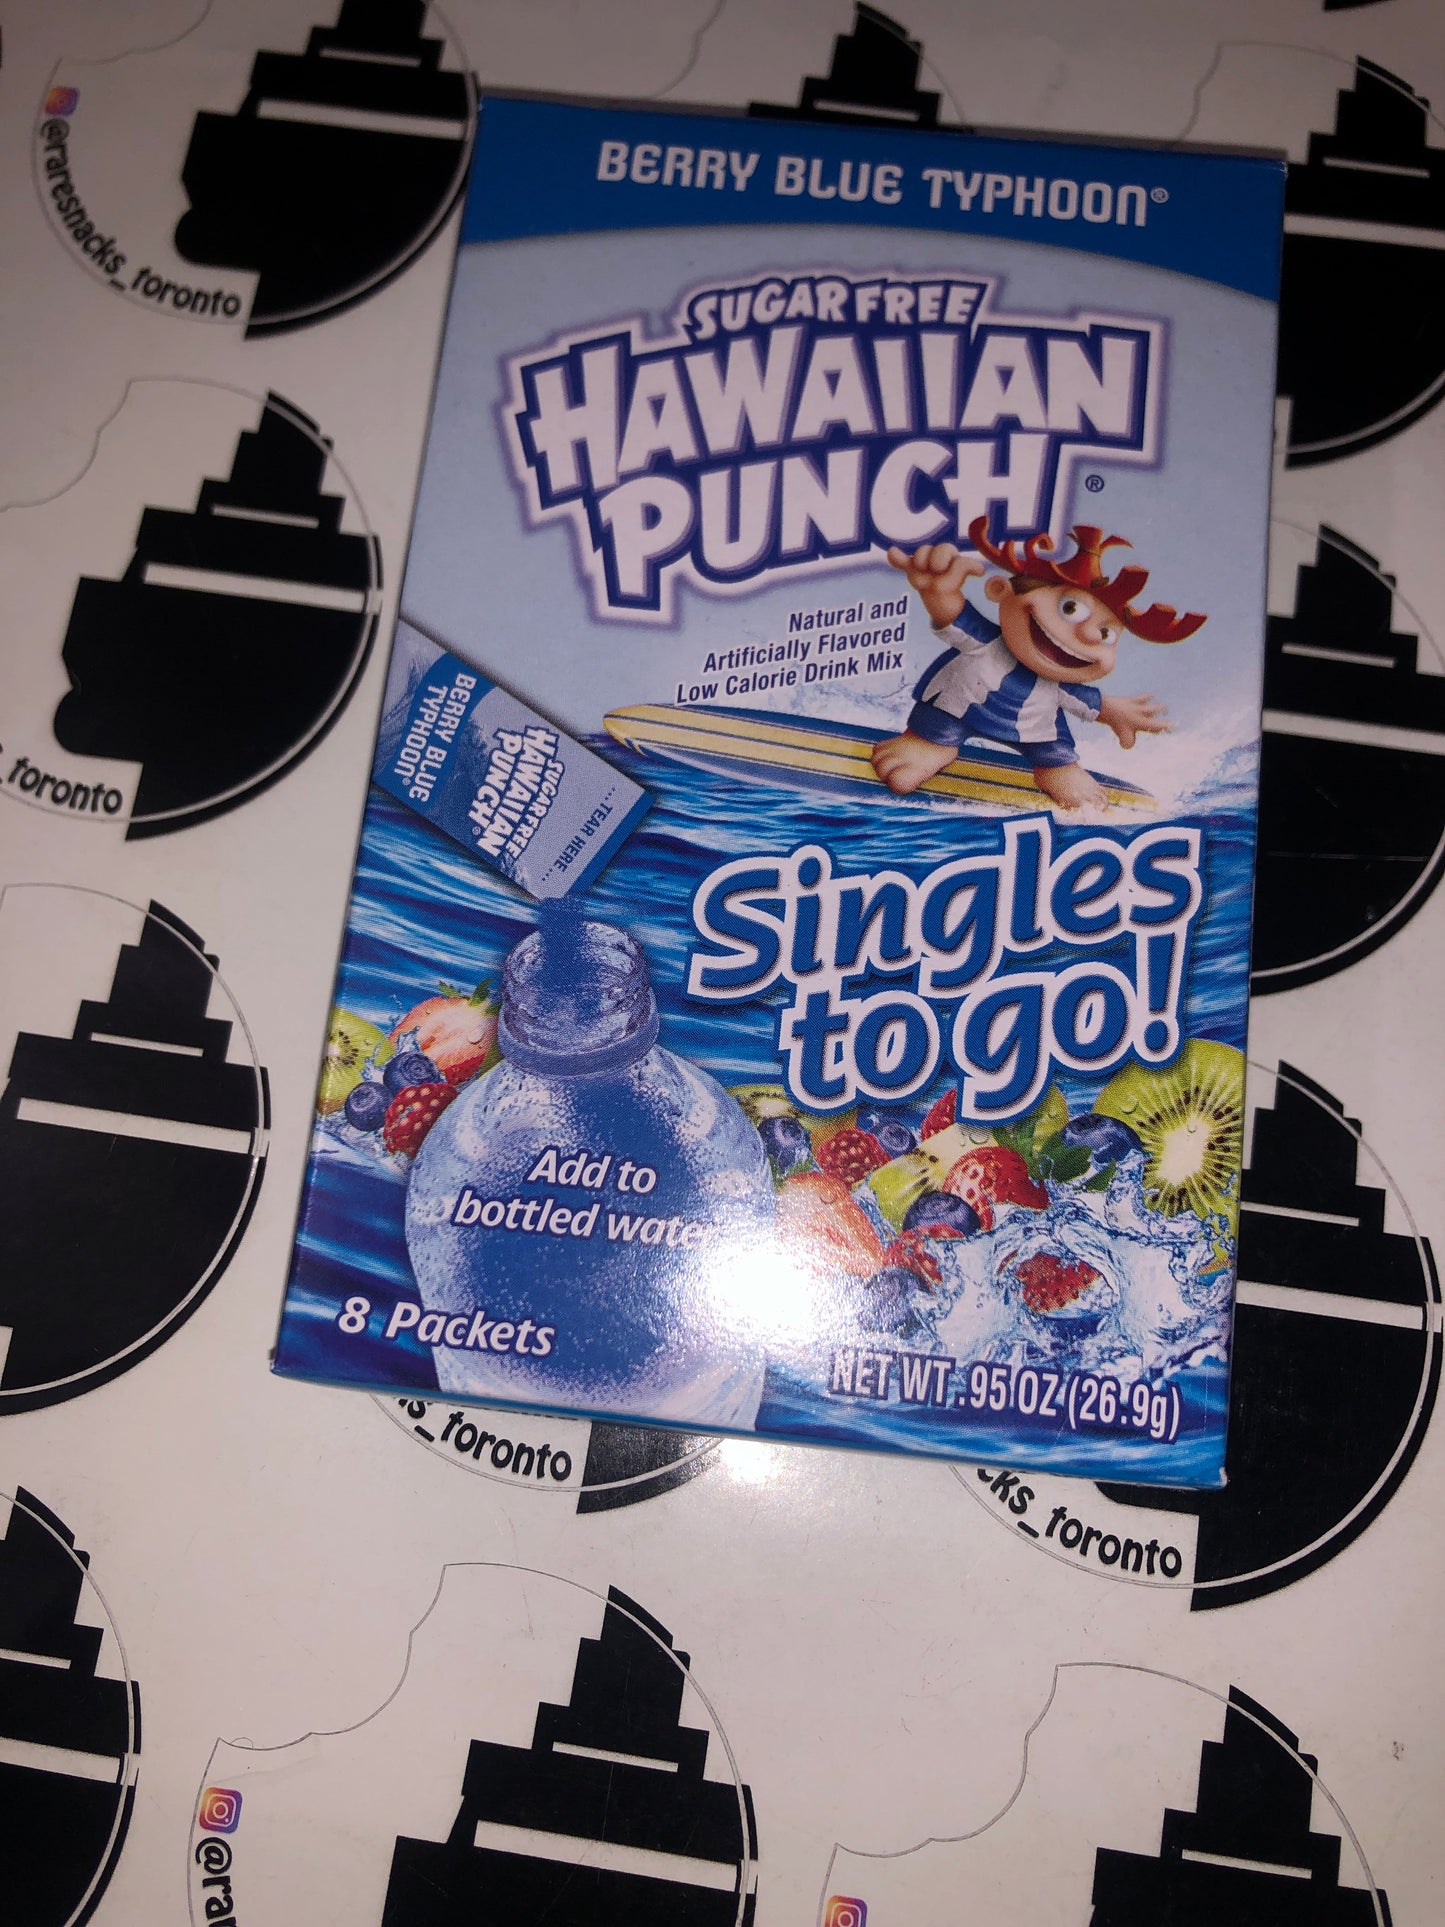 Hawaiian Punch Berry Blue Typhoon sugar free singles to go